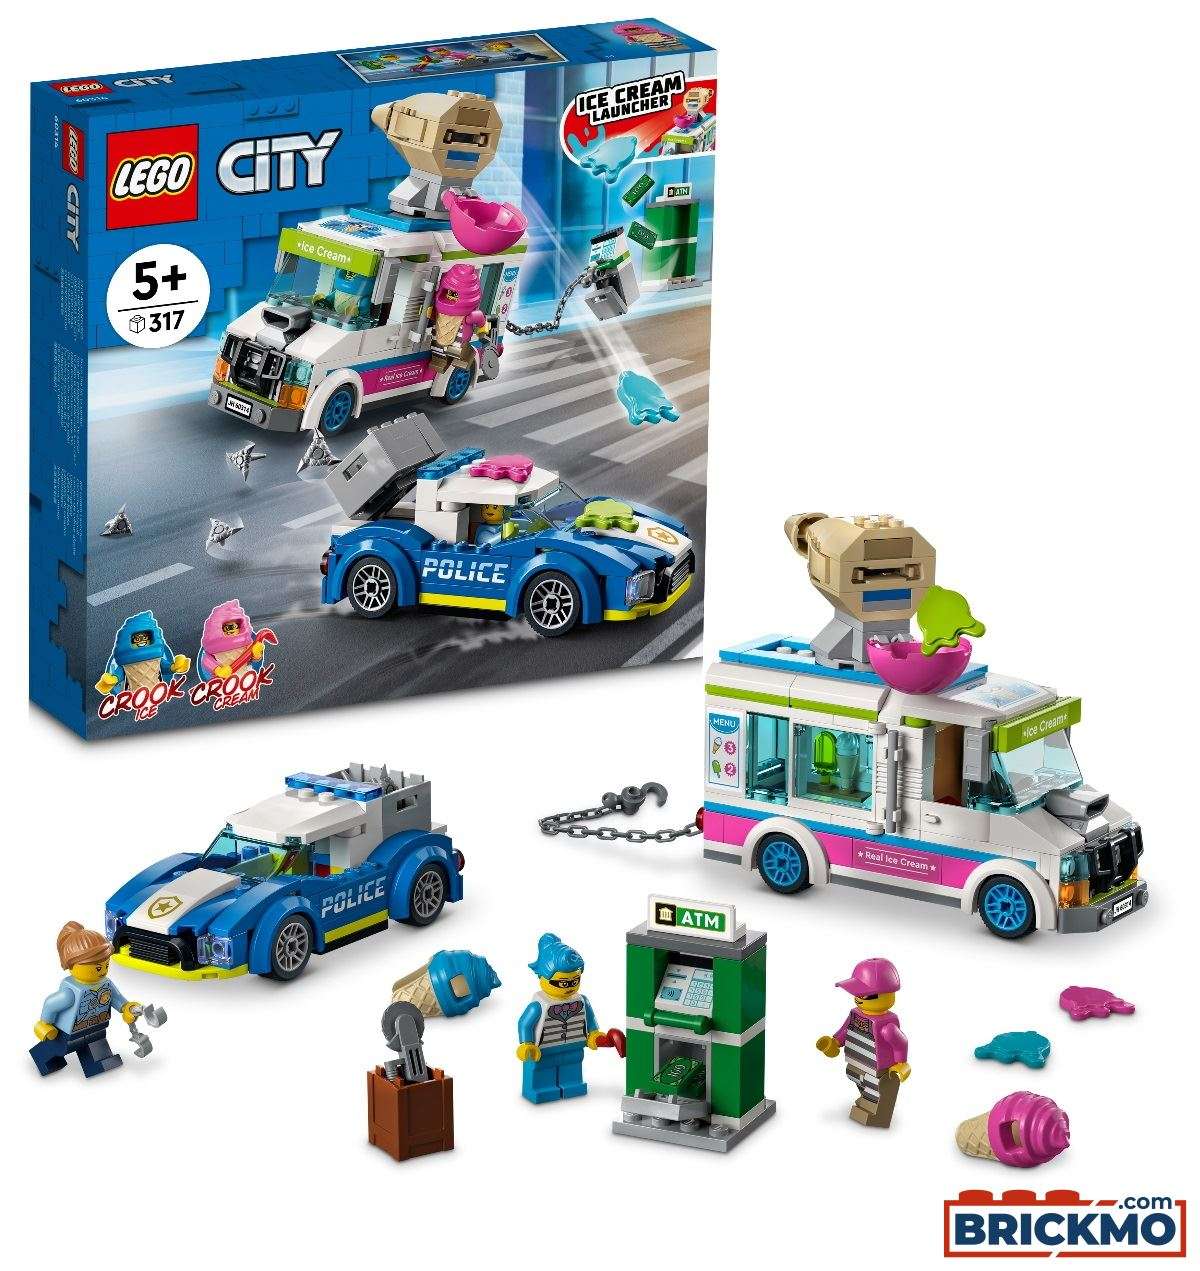 LEGO City 60314 Eiswagen-Verfolgungsjagd 60314 spezialist Models Truck TRUCKMO – Models Your | Truck